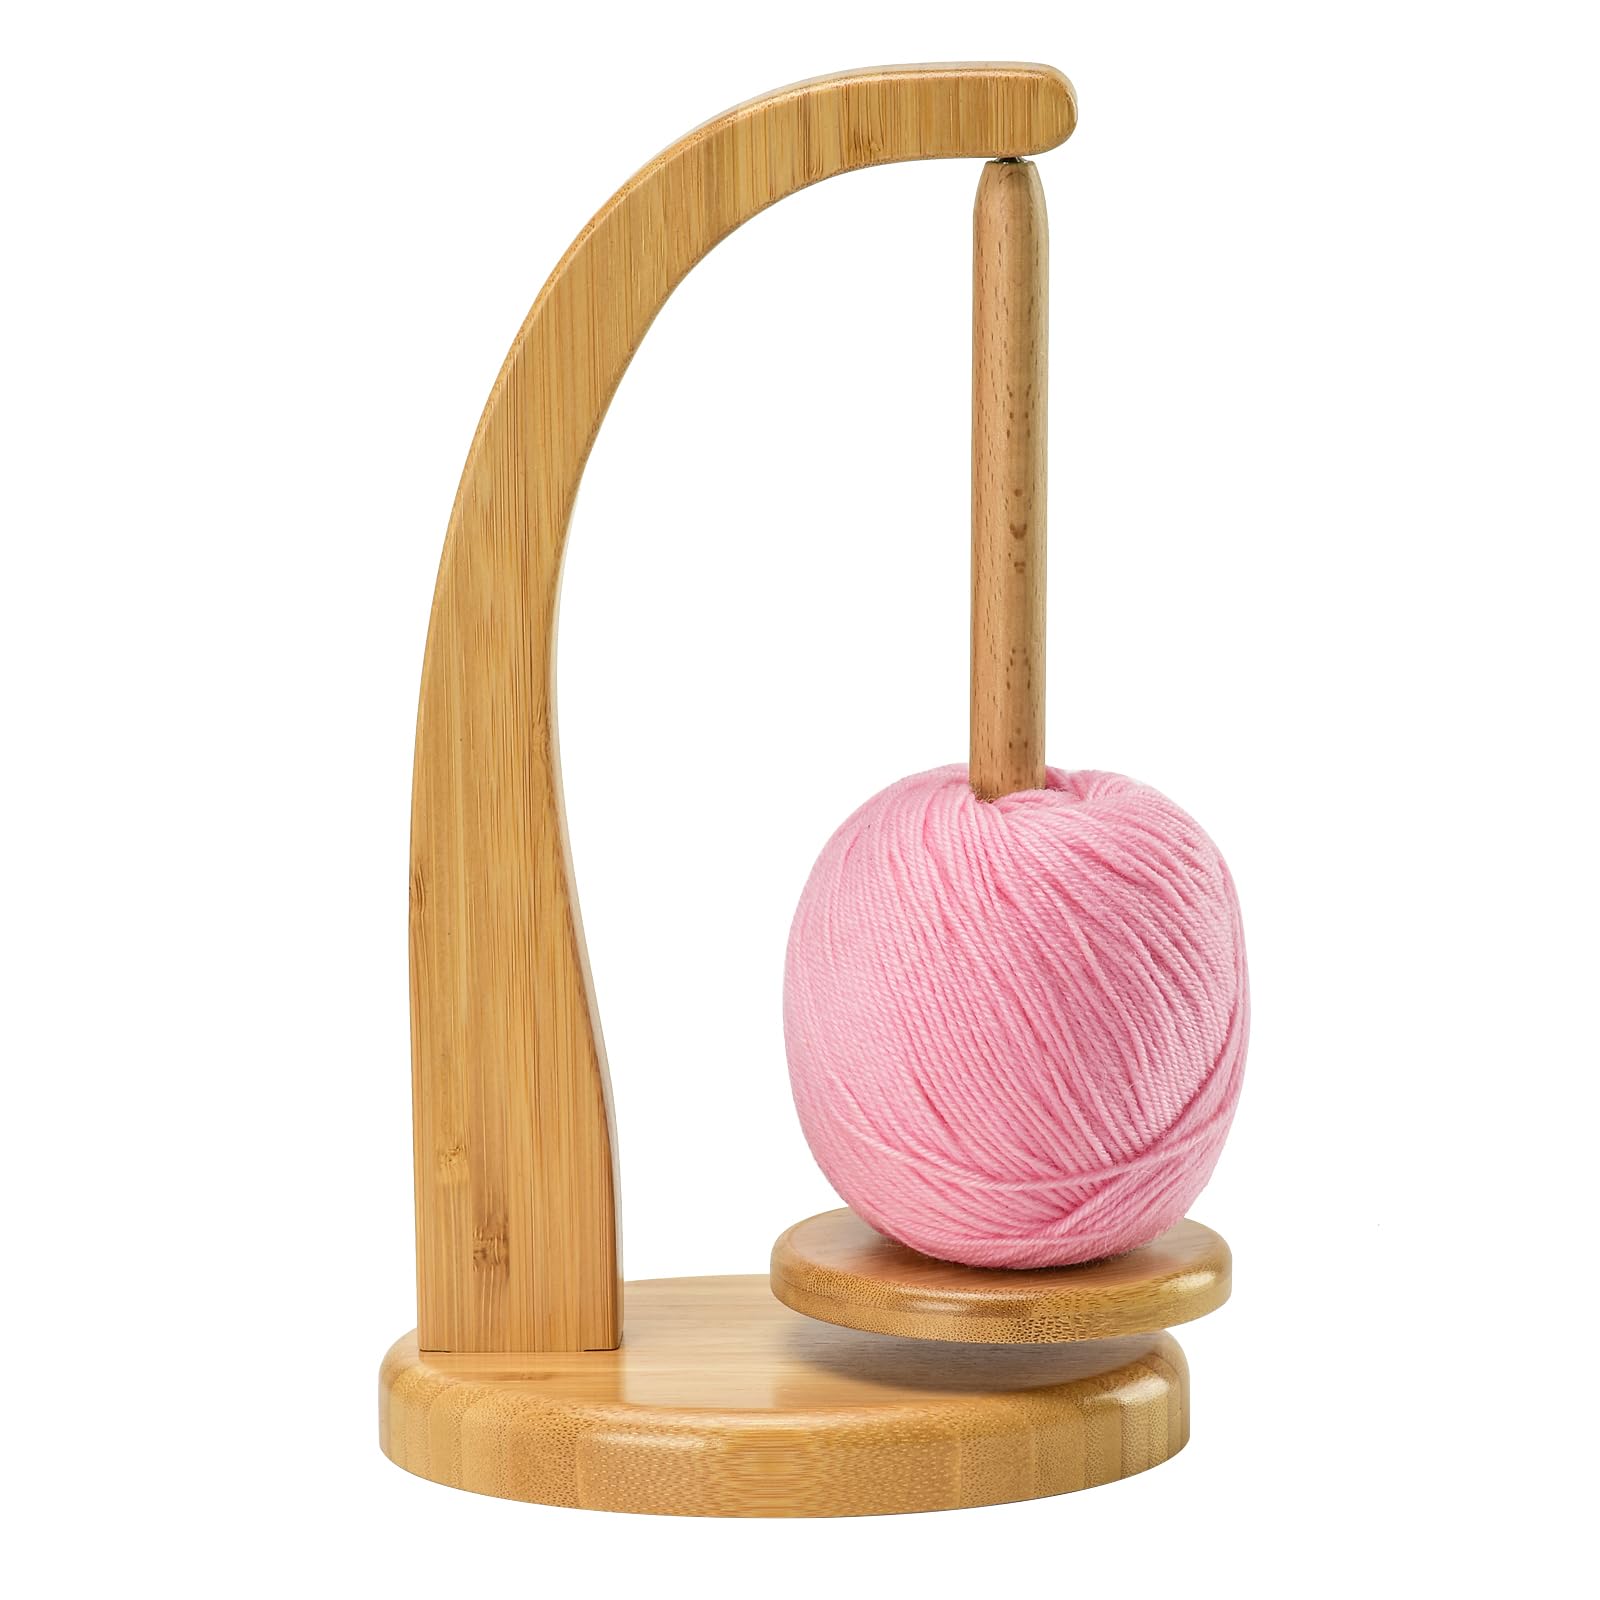 Yarn Holder for Knitting and Crocheting,Crochet Gift for Knitting Lovers,Wooden Yarn Spinner for Crochet by Artowell (Original Bamboo Color)